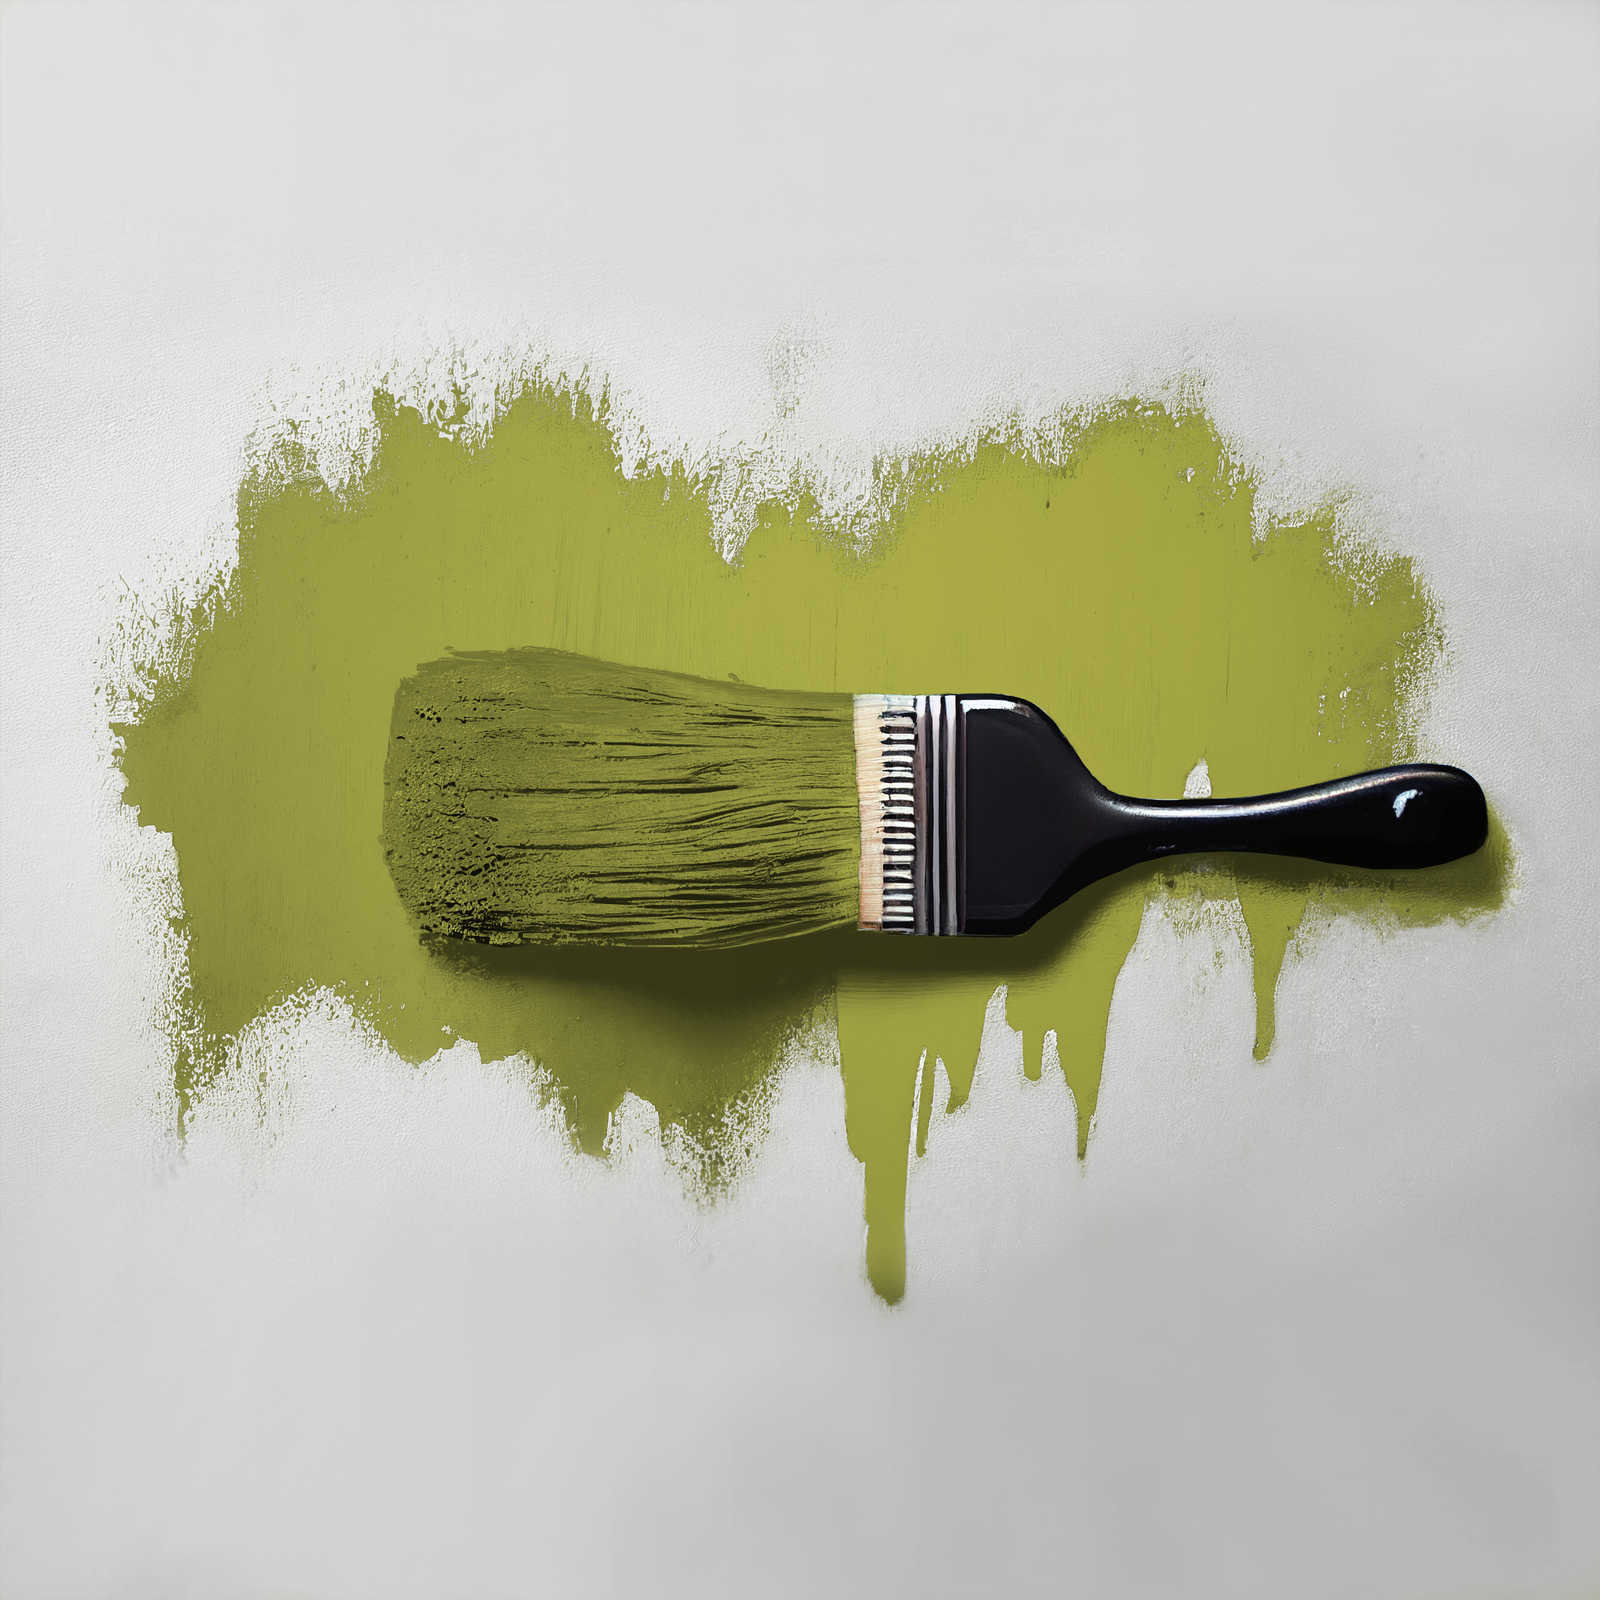             Wandfarbe in knalligem Gelbgrün »Kitchy Kiwi« TCK4009 – 5 Liter
        